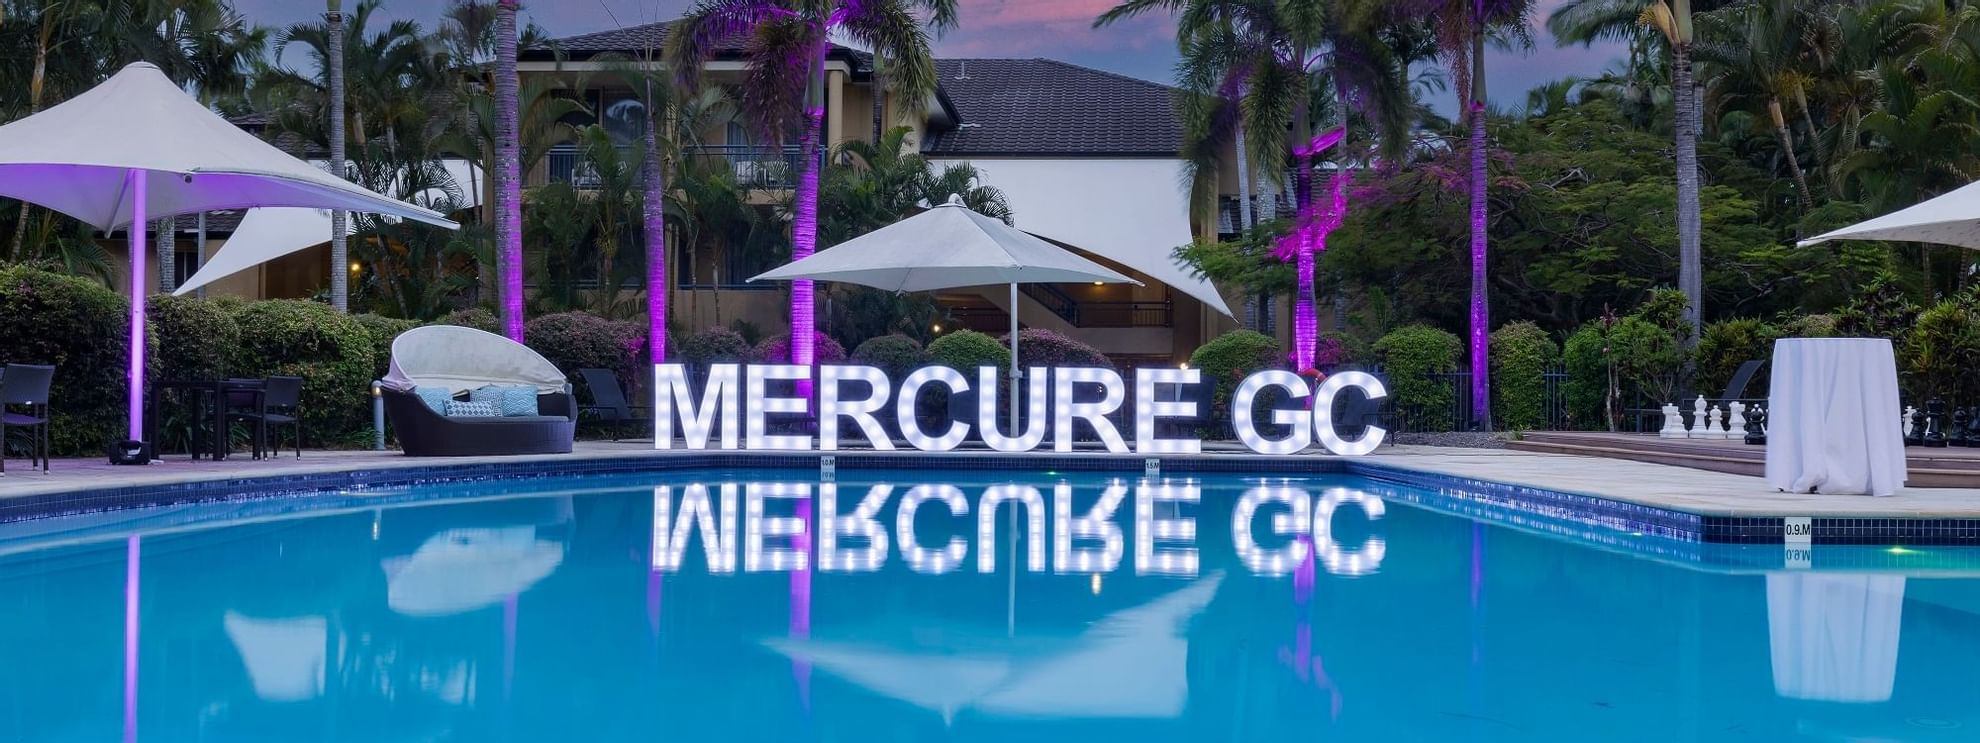 Poolside events at Mercure Gold Coast